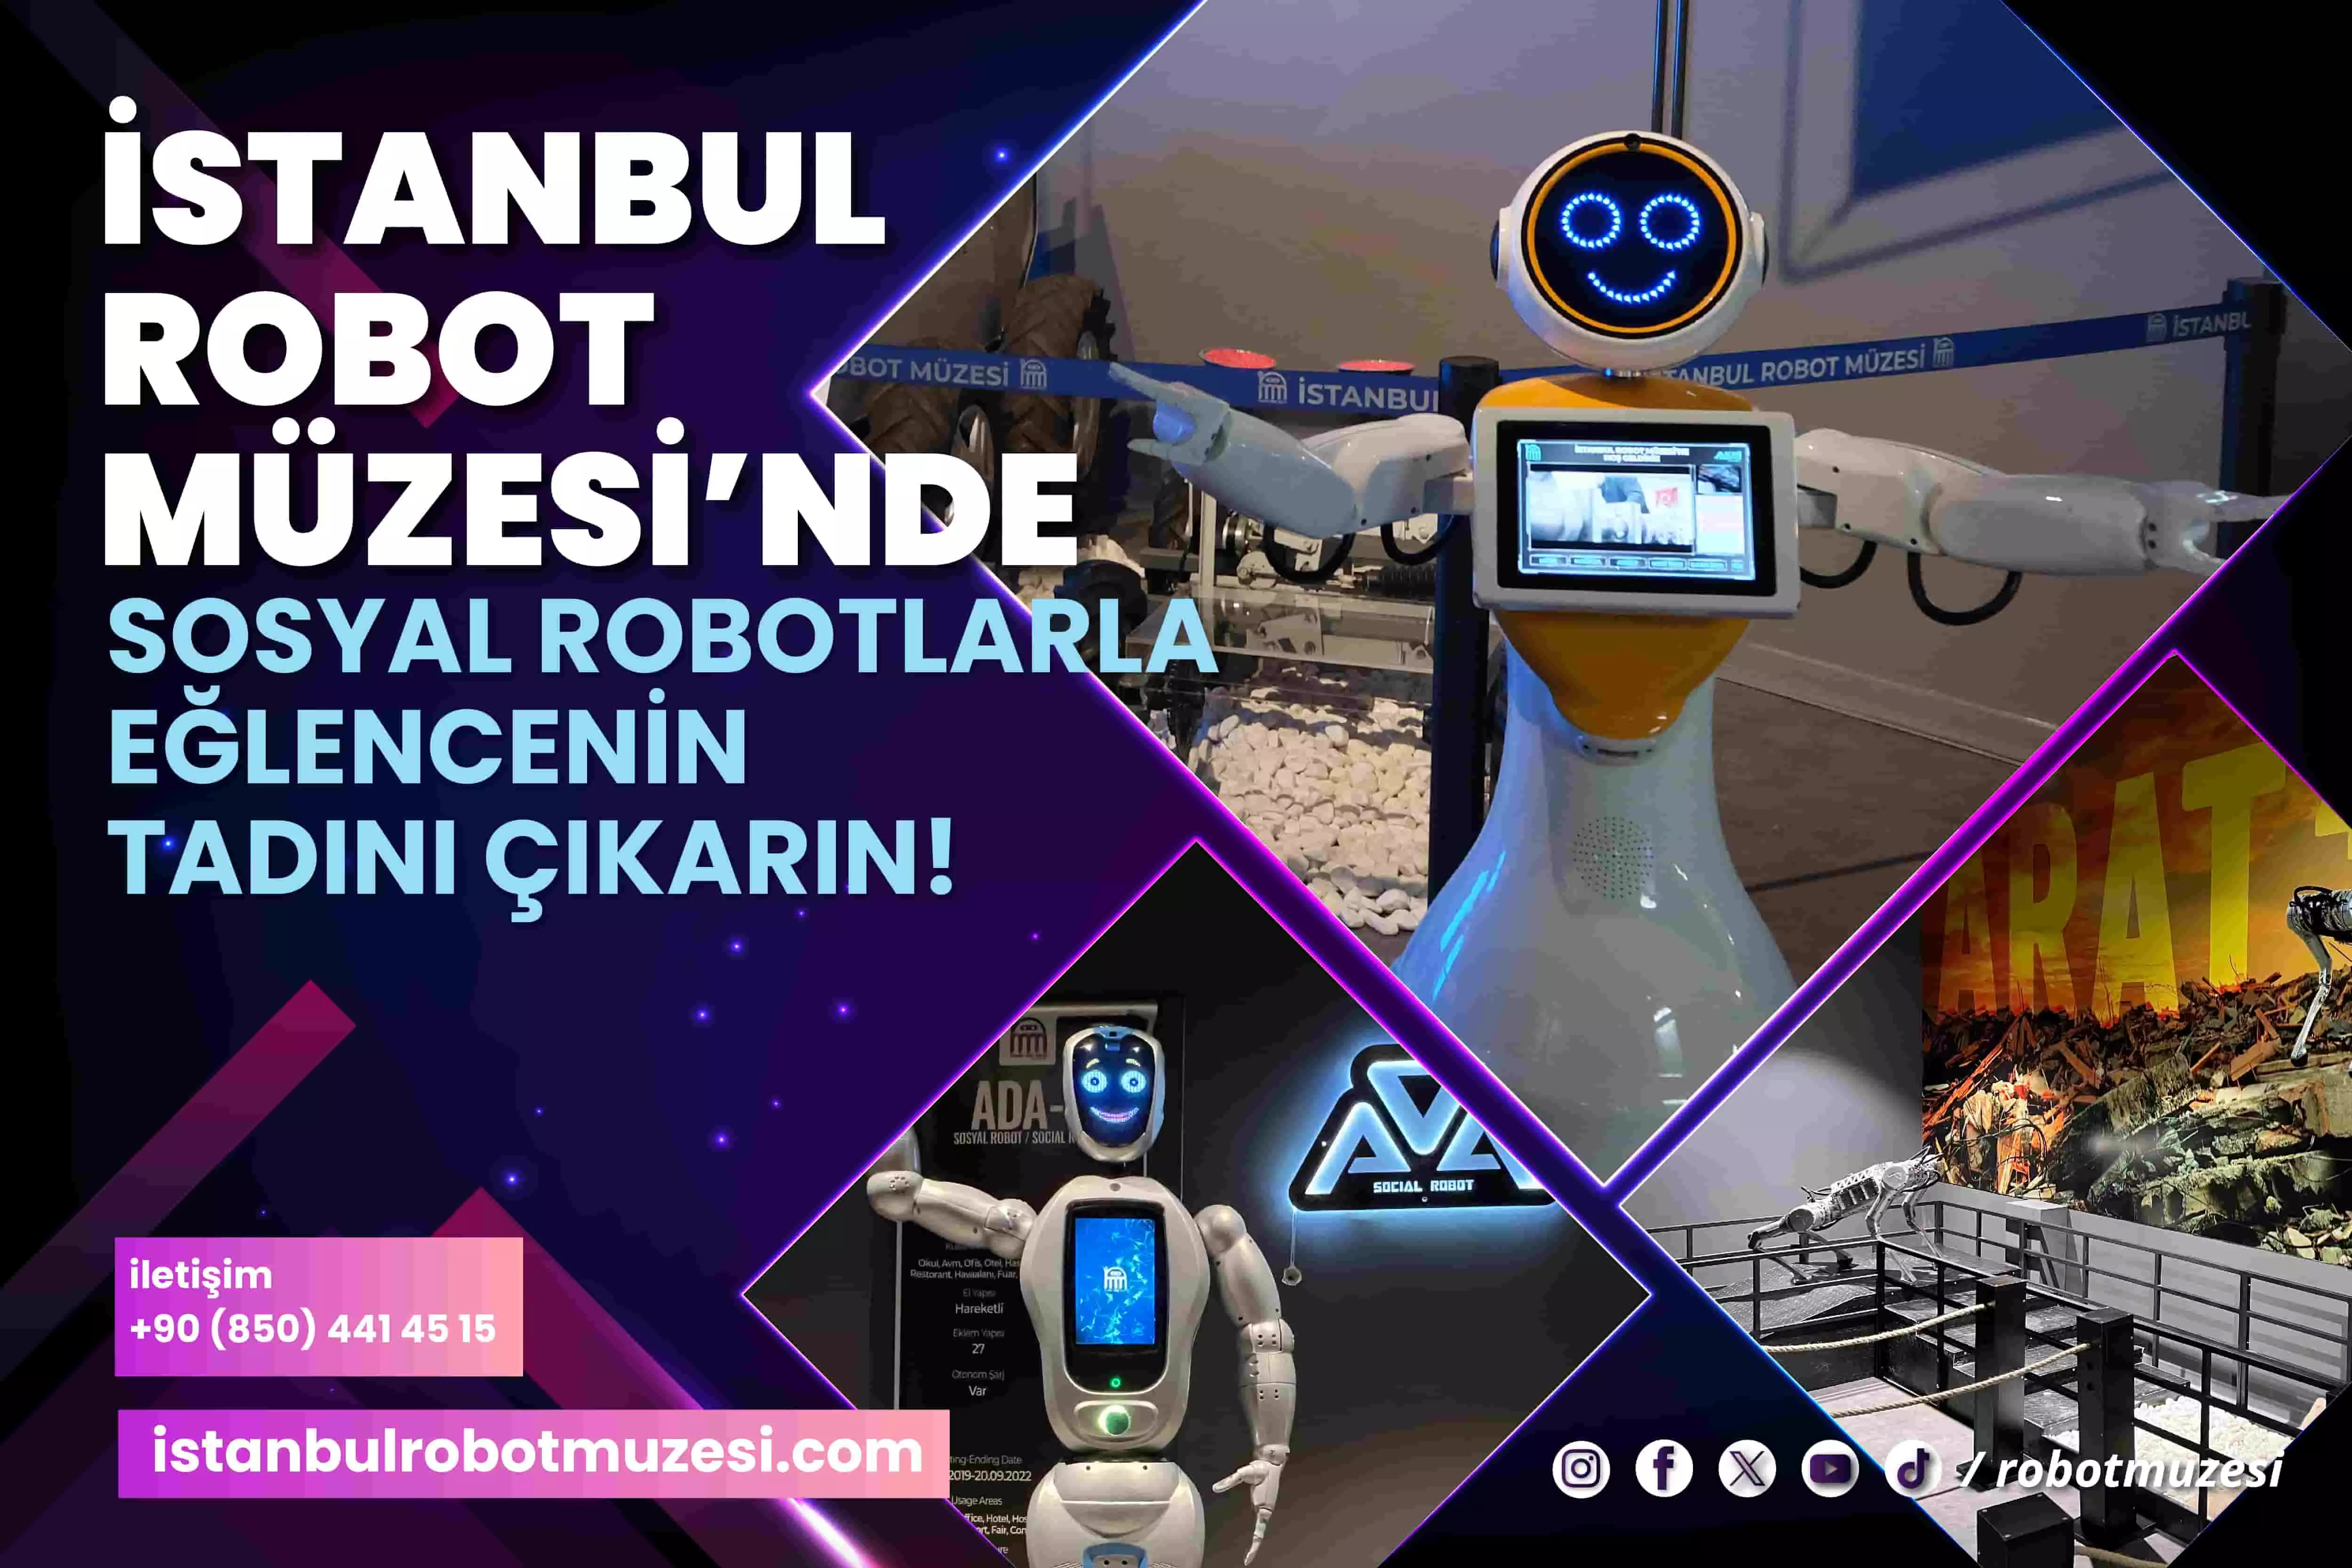 Museo del Robot de Estambul billete - 7